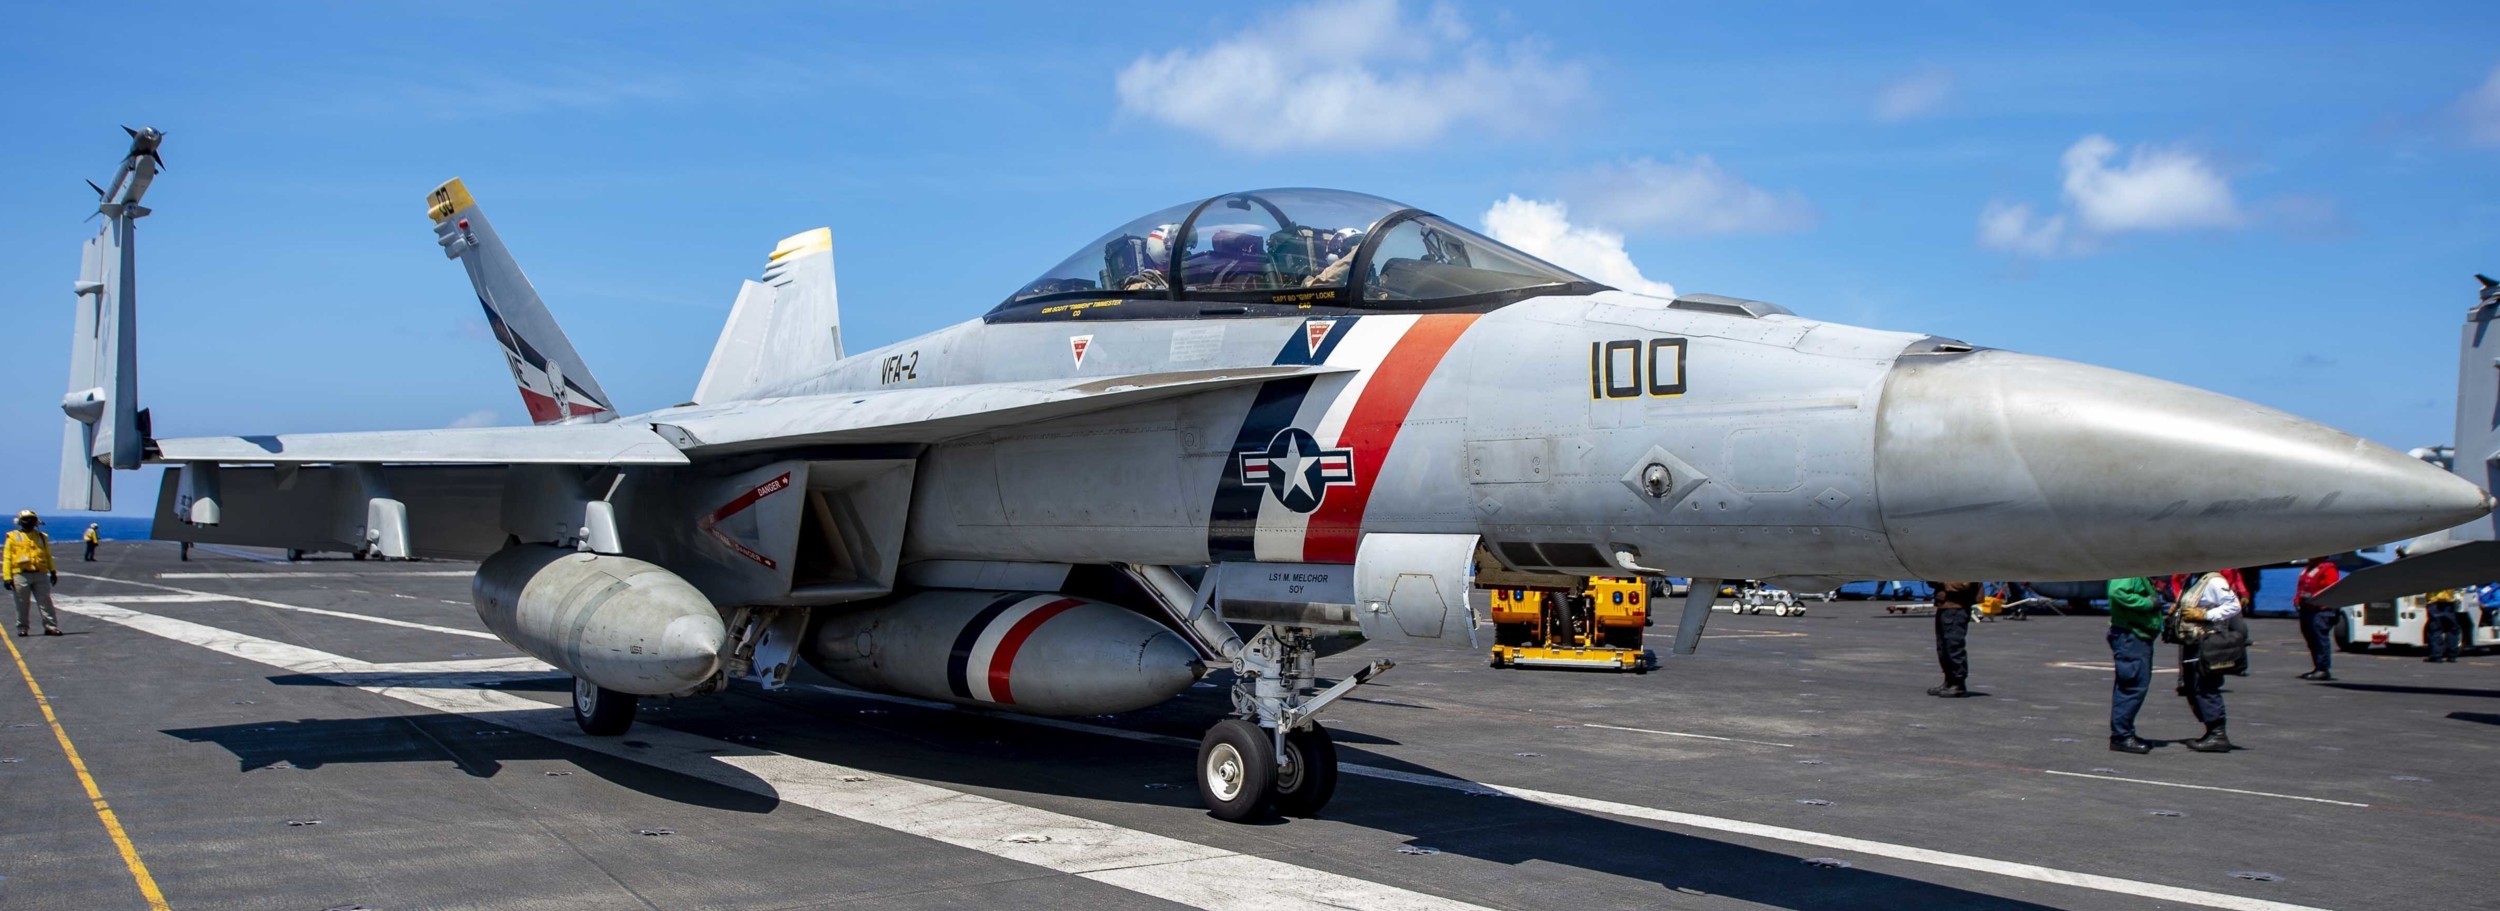 vfa-2 bounty hunters strike fighter squadron us navy f/a-18f super hornet carrier air wing cvw-2 uss carl vinson cvn-70 73